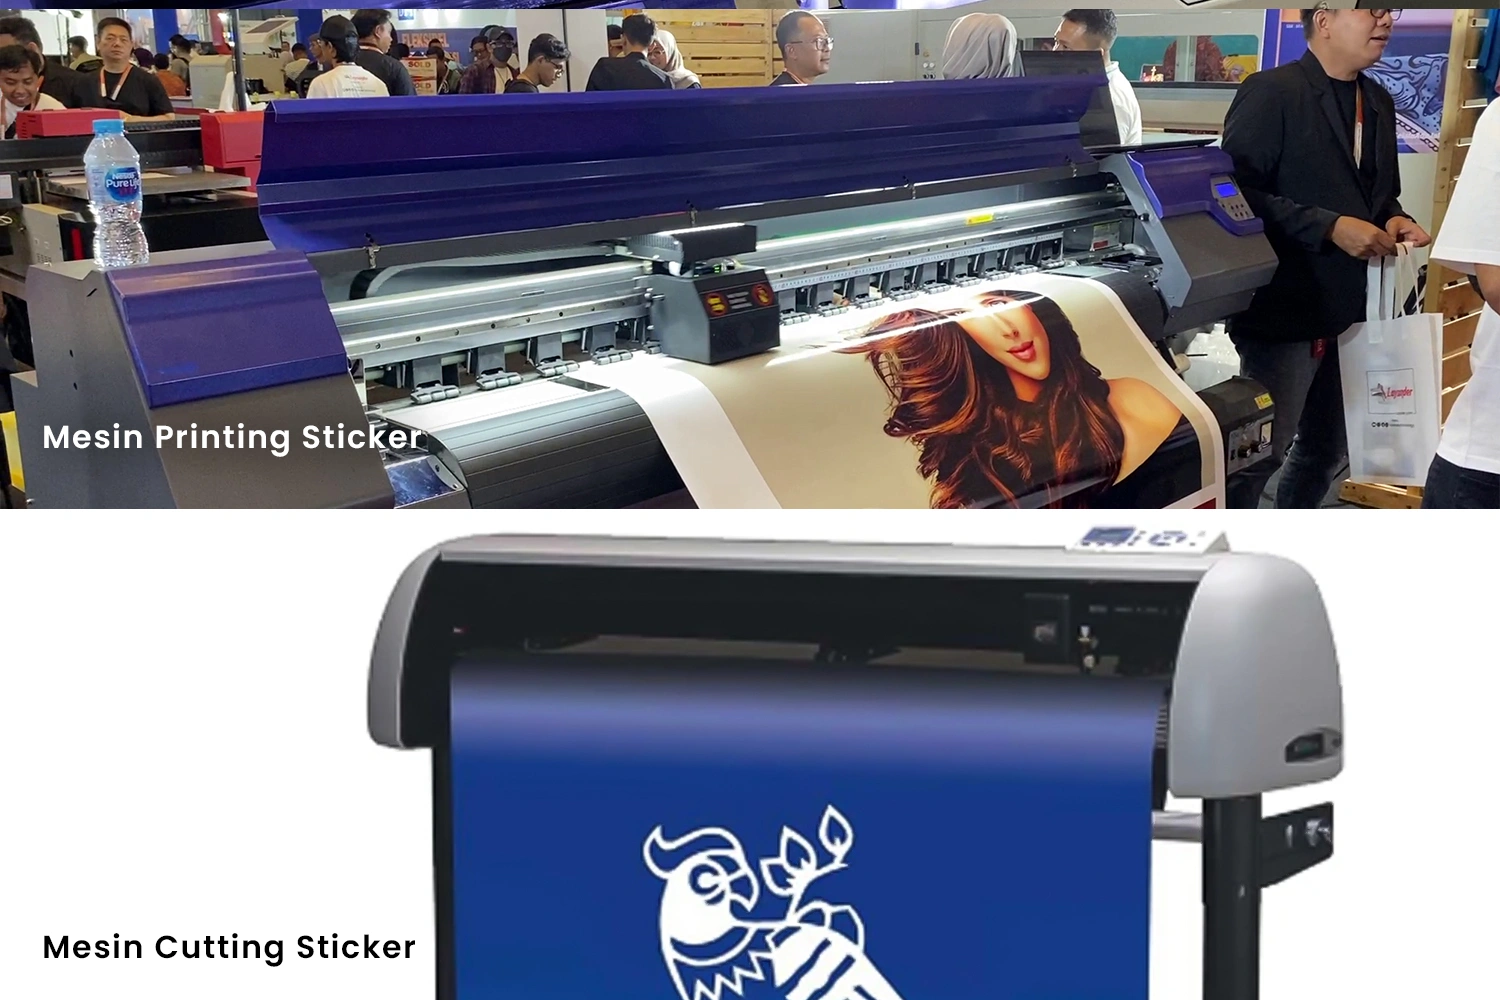 Mesin Yang Digunakan Oleh Cutting Sticker Dan Printing Sticker.